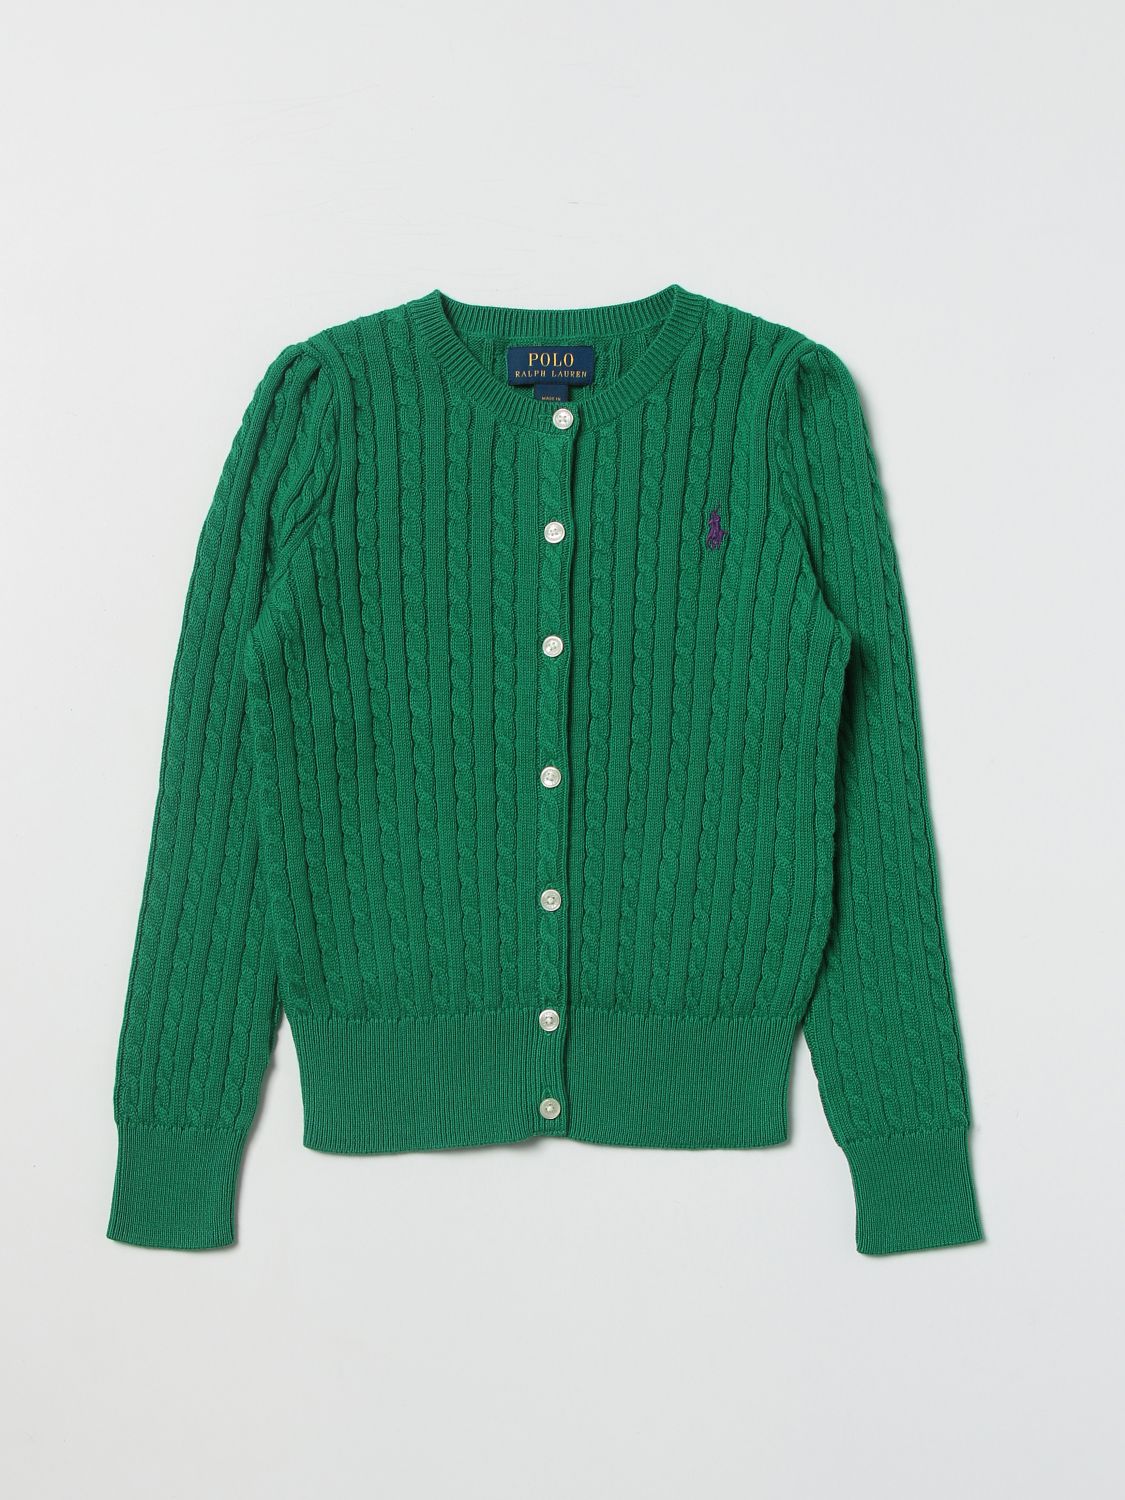 POLO RALPH LAUREN: sweater for girls - Green | Polo Ralph Lauren sweater  311737911 online on 